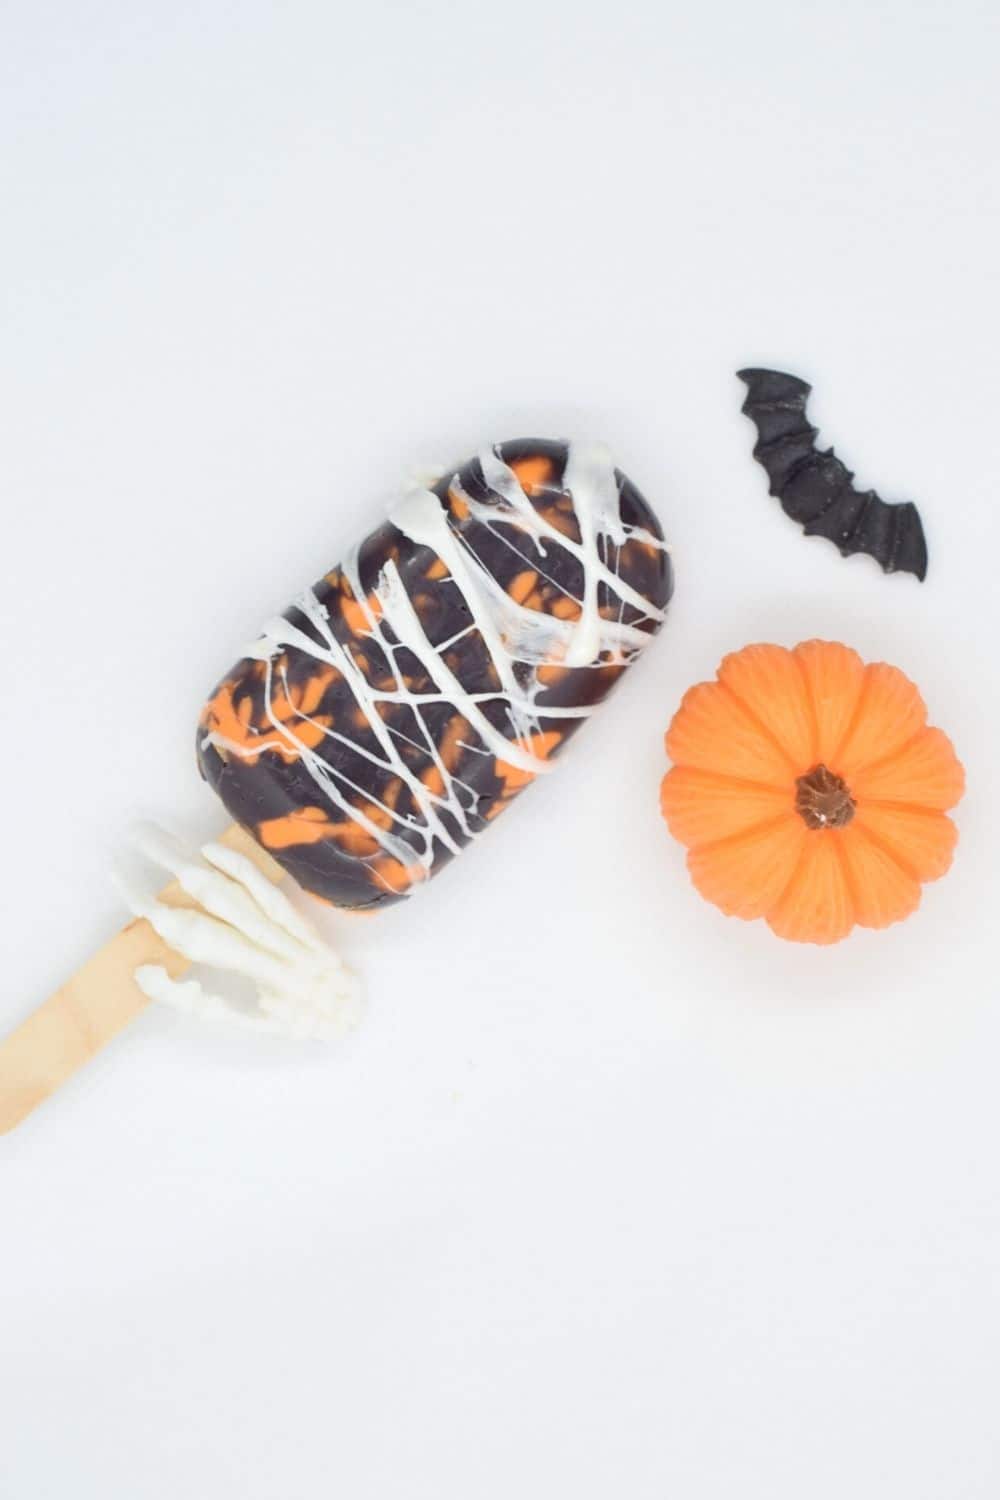 Spiderweb marbled orange cakesicles - marshmallow and orange halloween cake pops